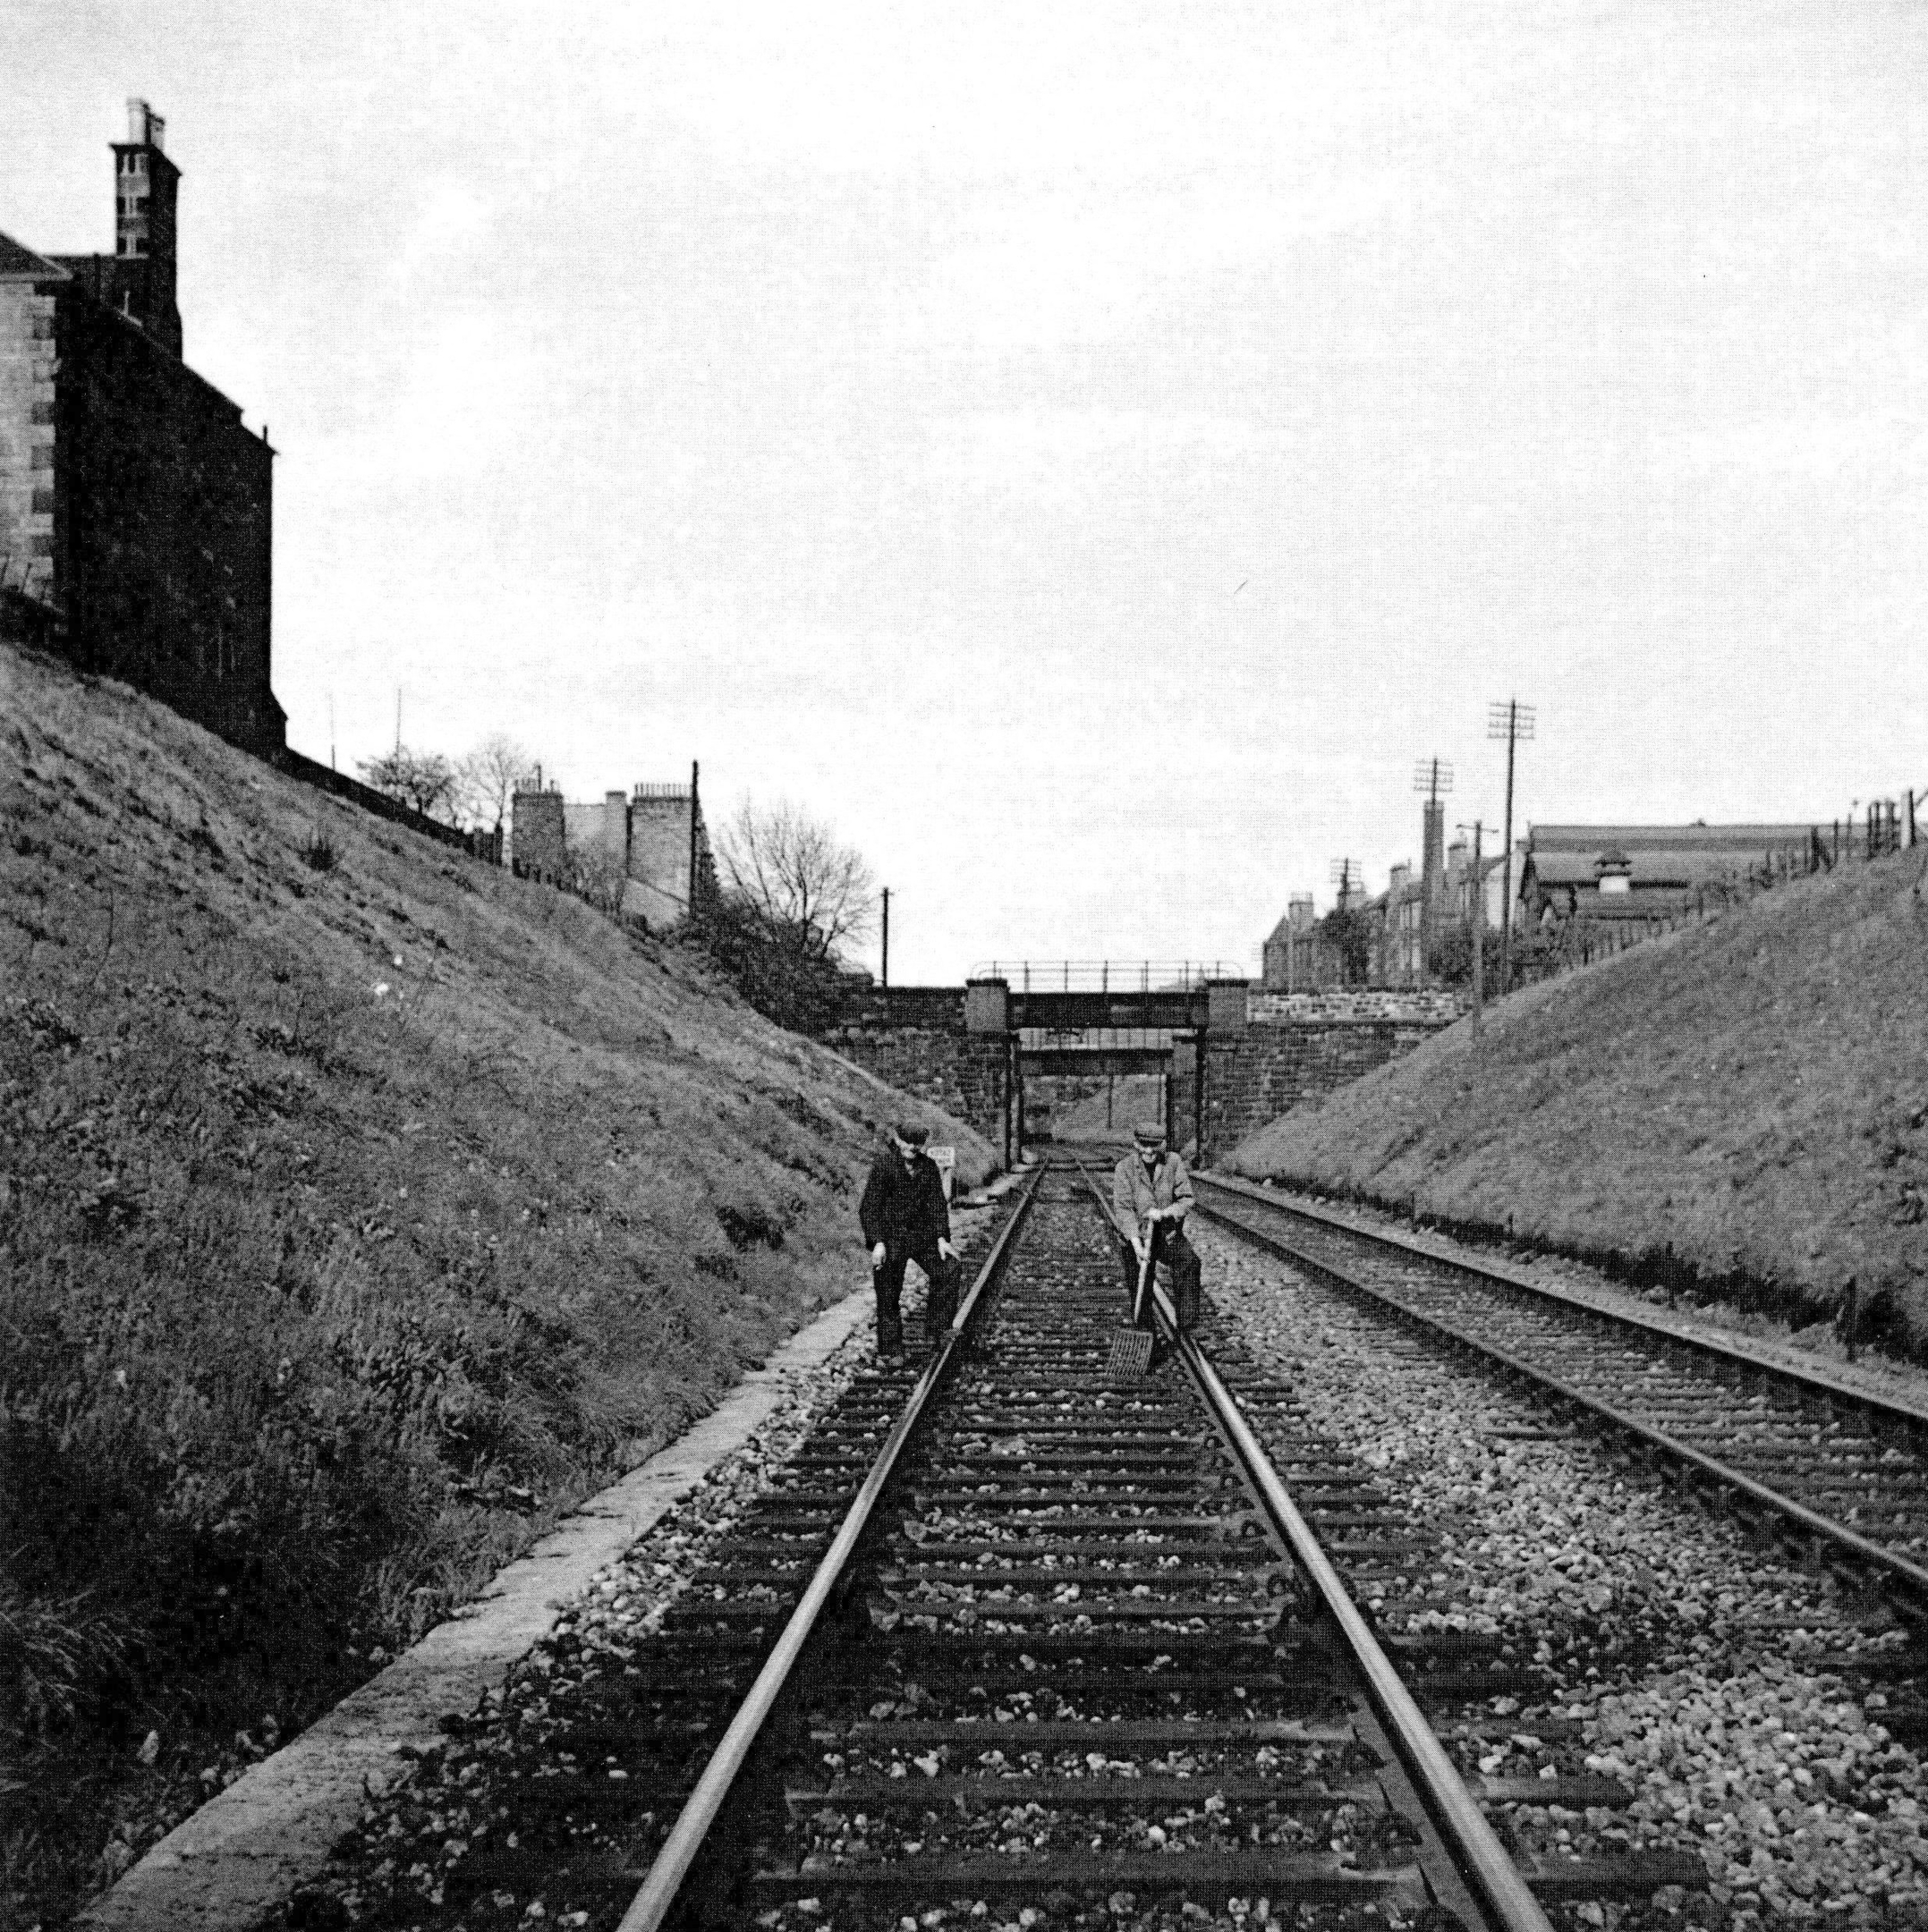 Men on the train tracks. 